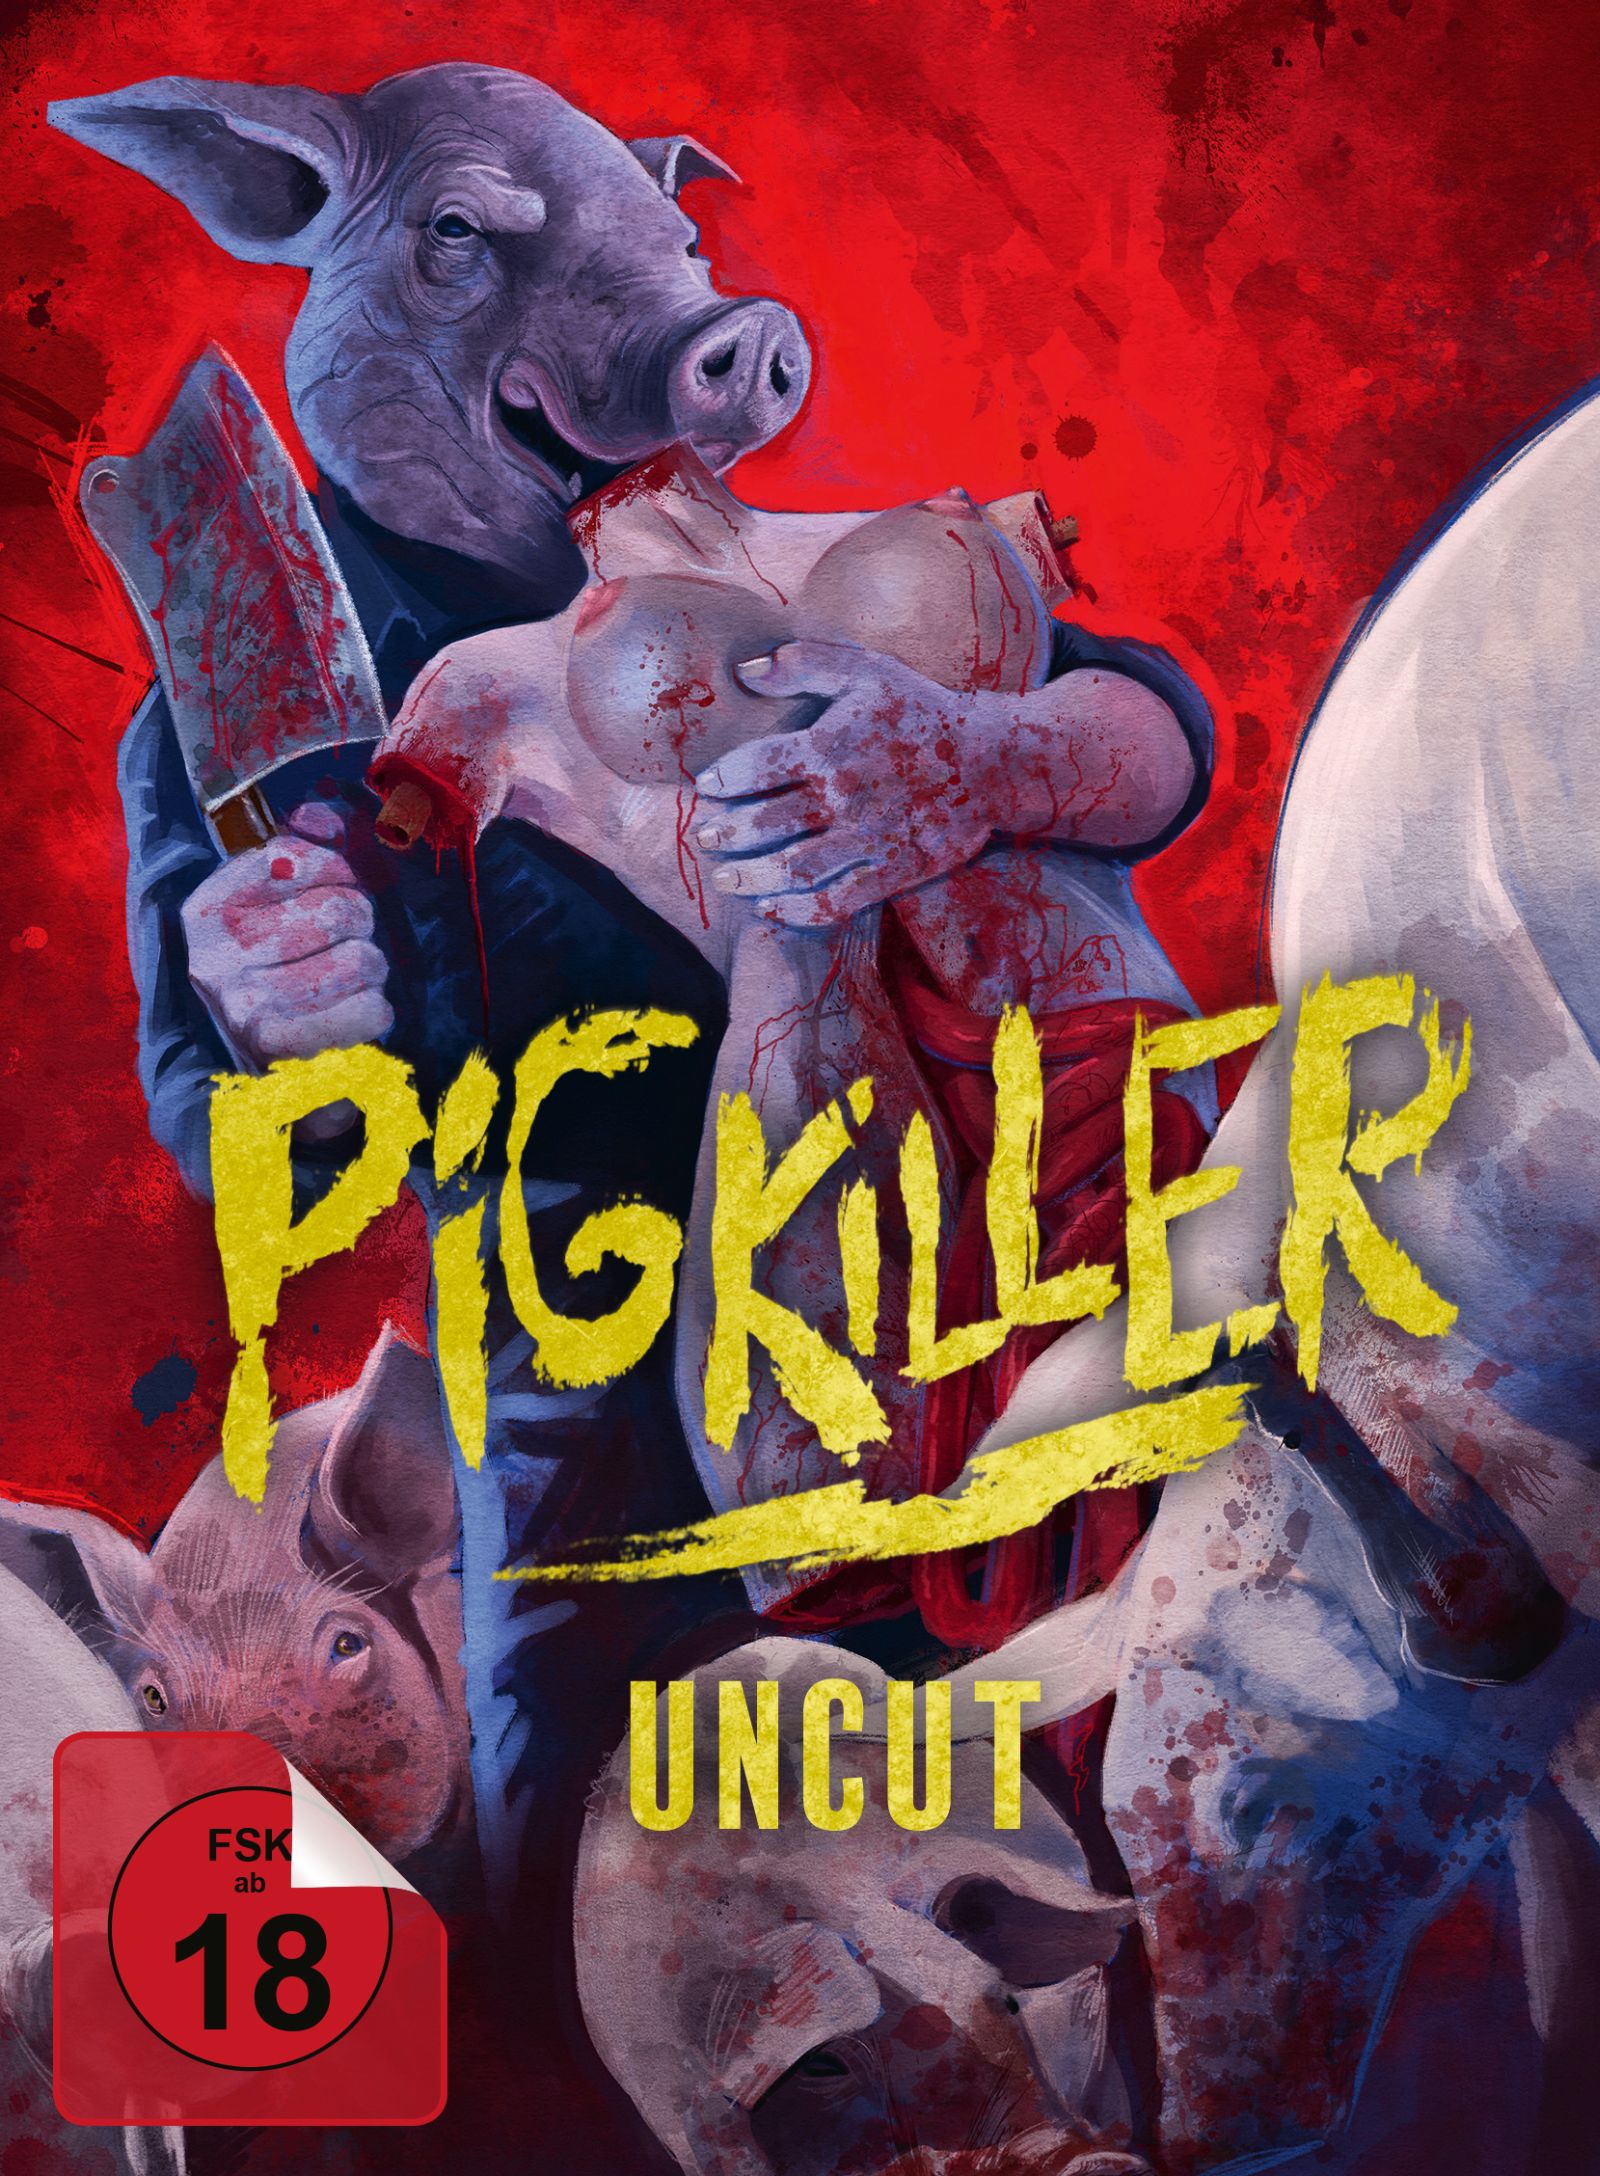 Pig Killer - 2-Disc Limited Edition Mediabook (Blu-ray + Bonus-DVD)